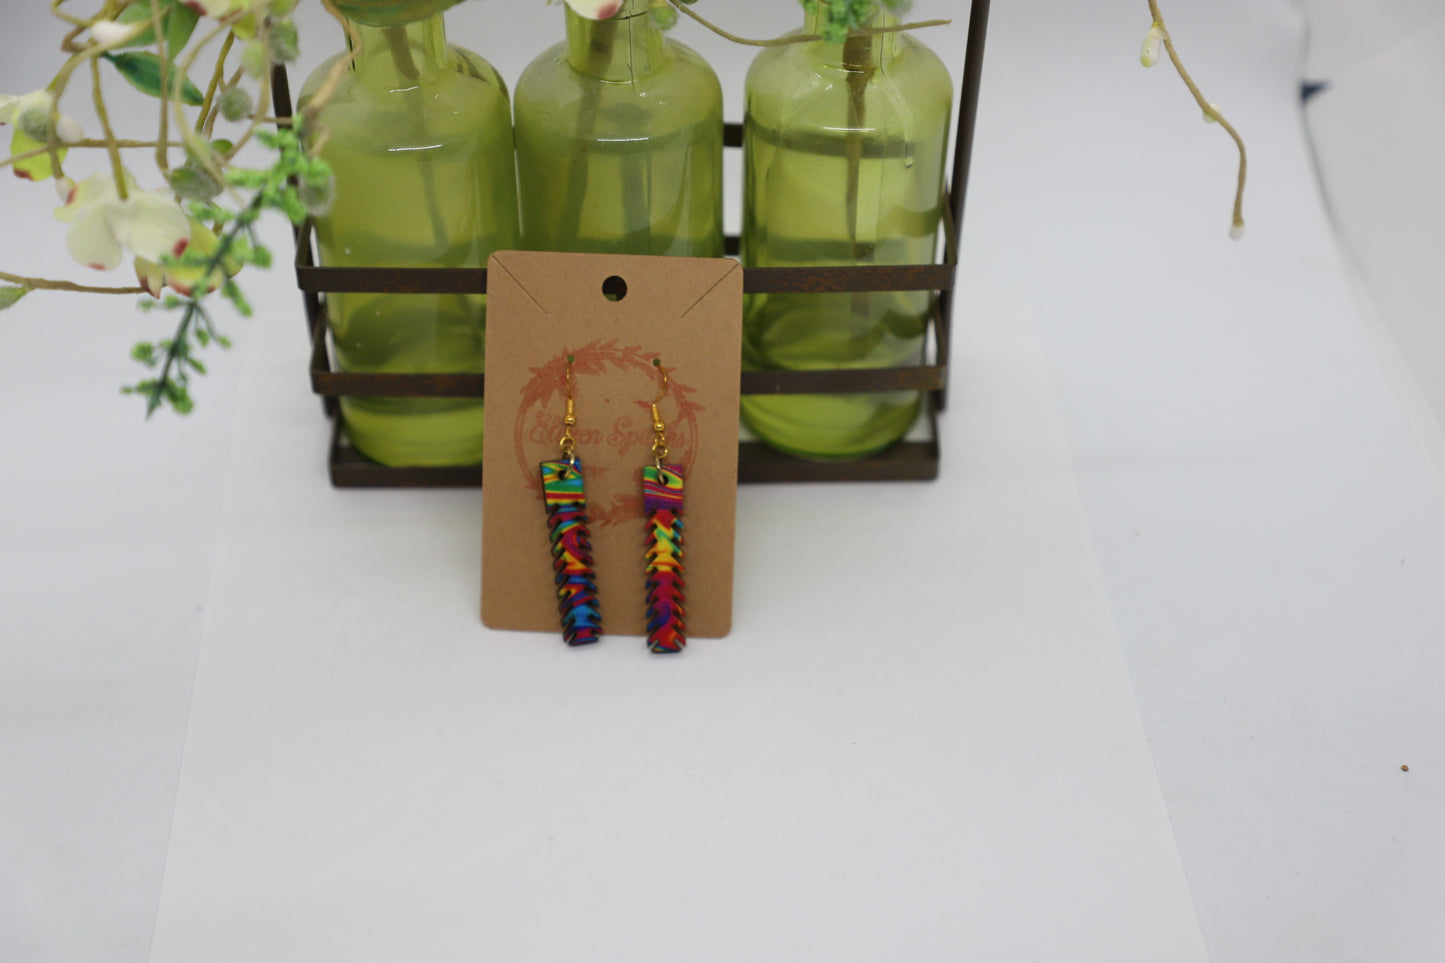 Groovy rainbow long wood earrings